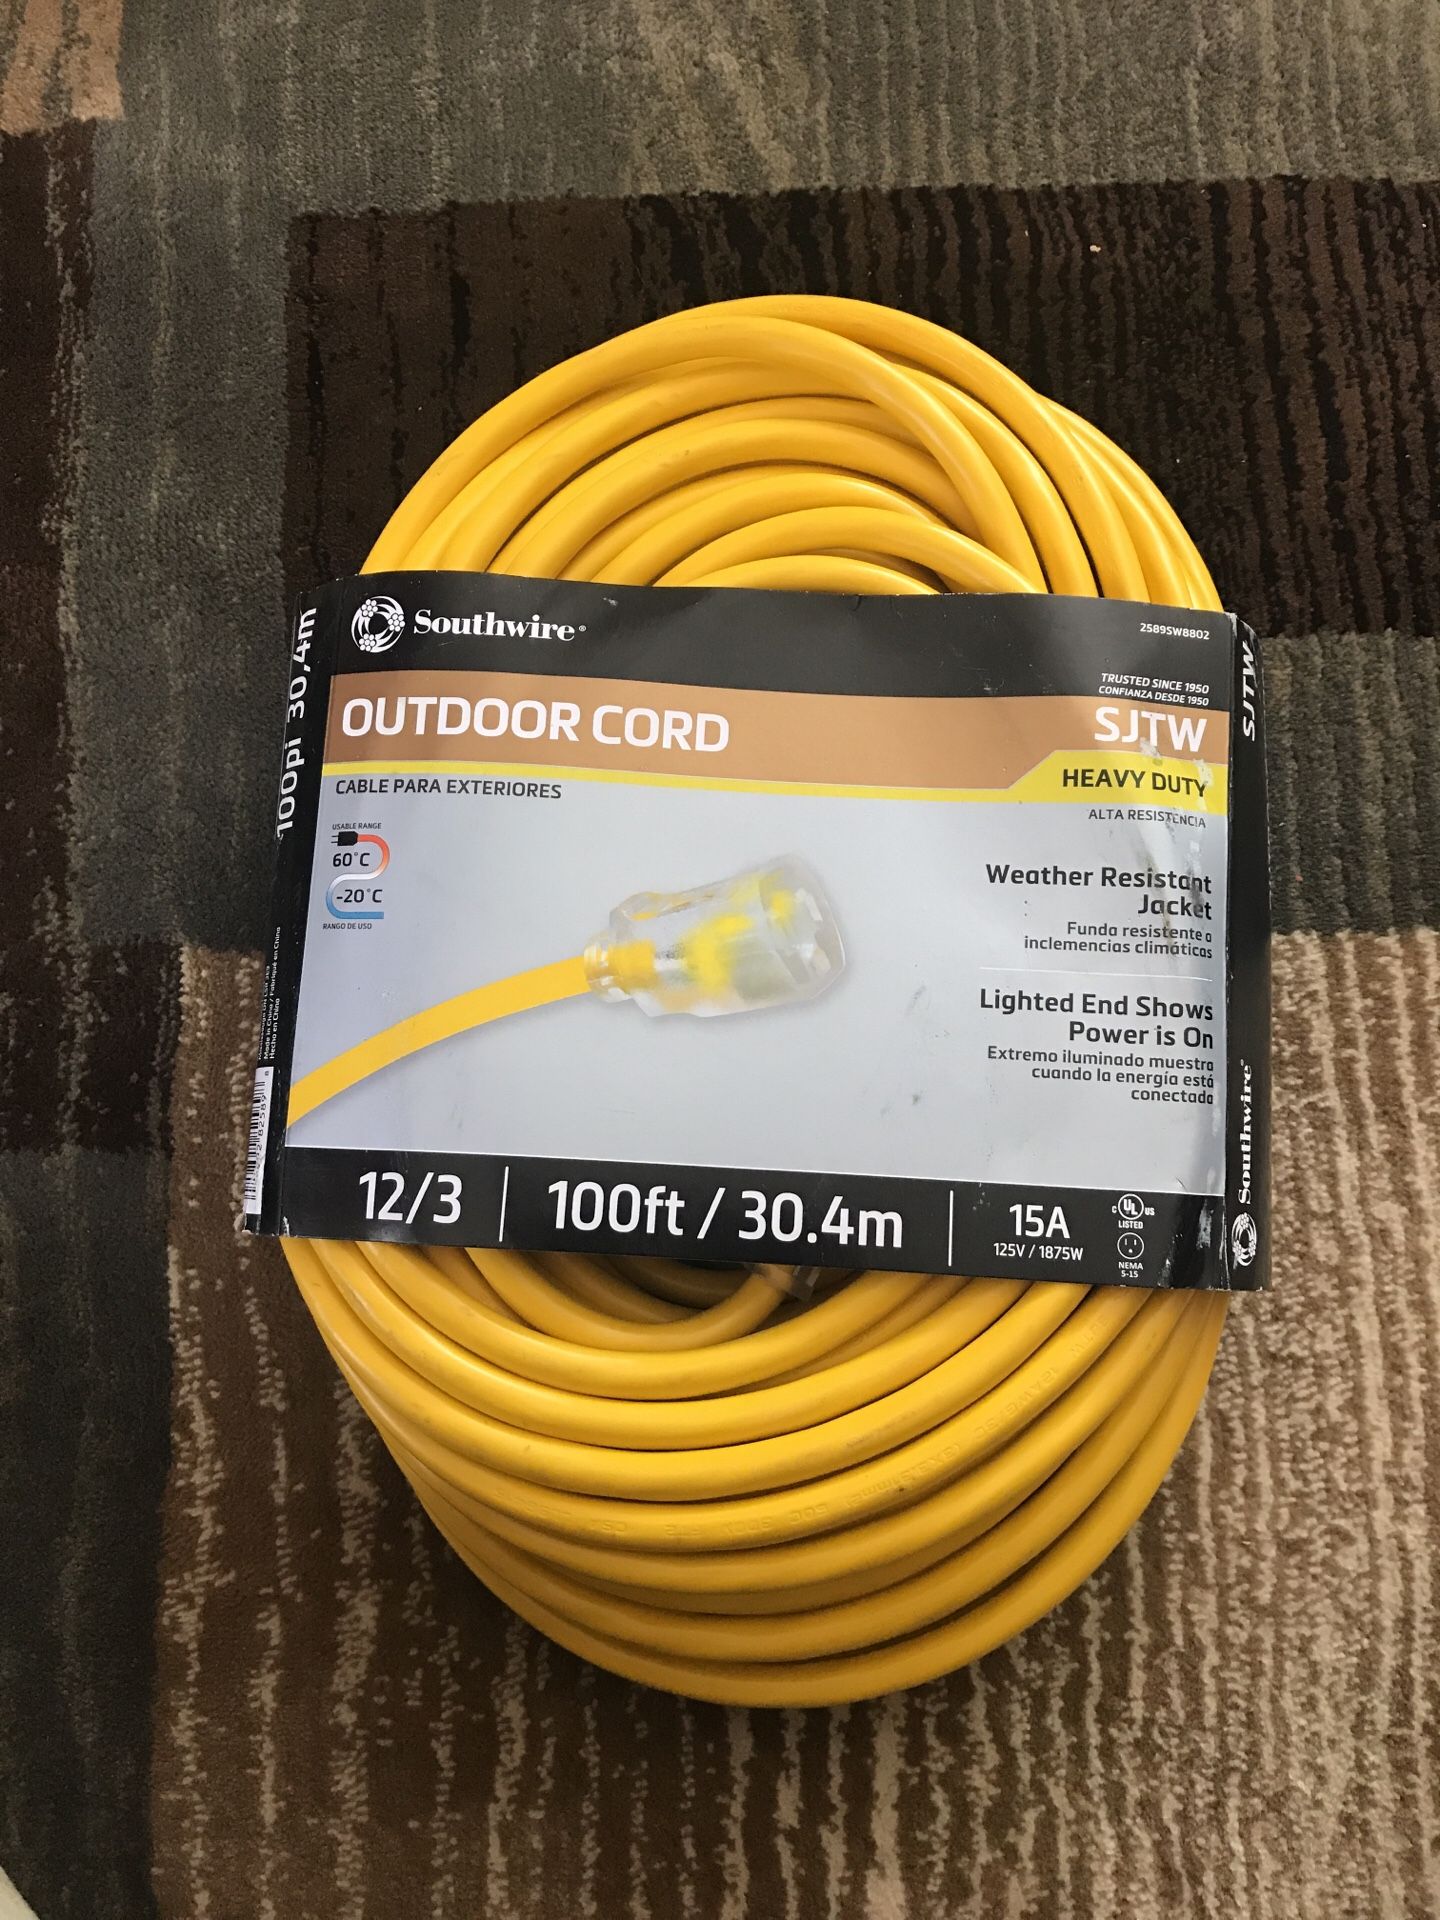 Outdoor cord